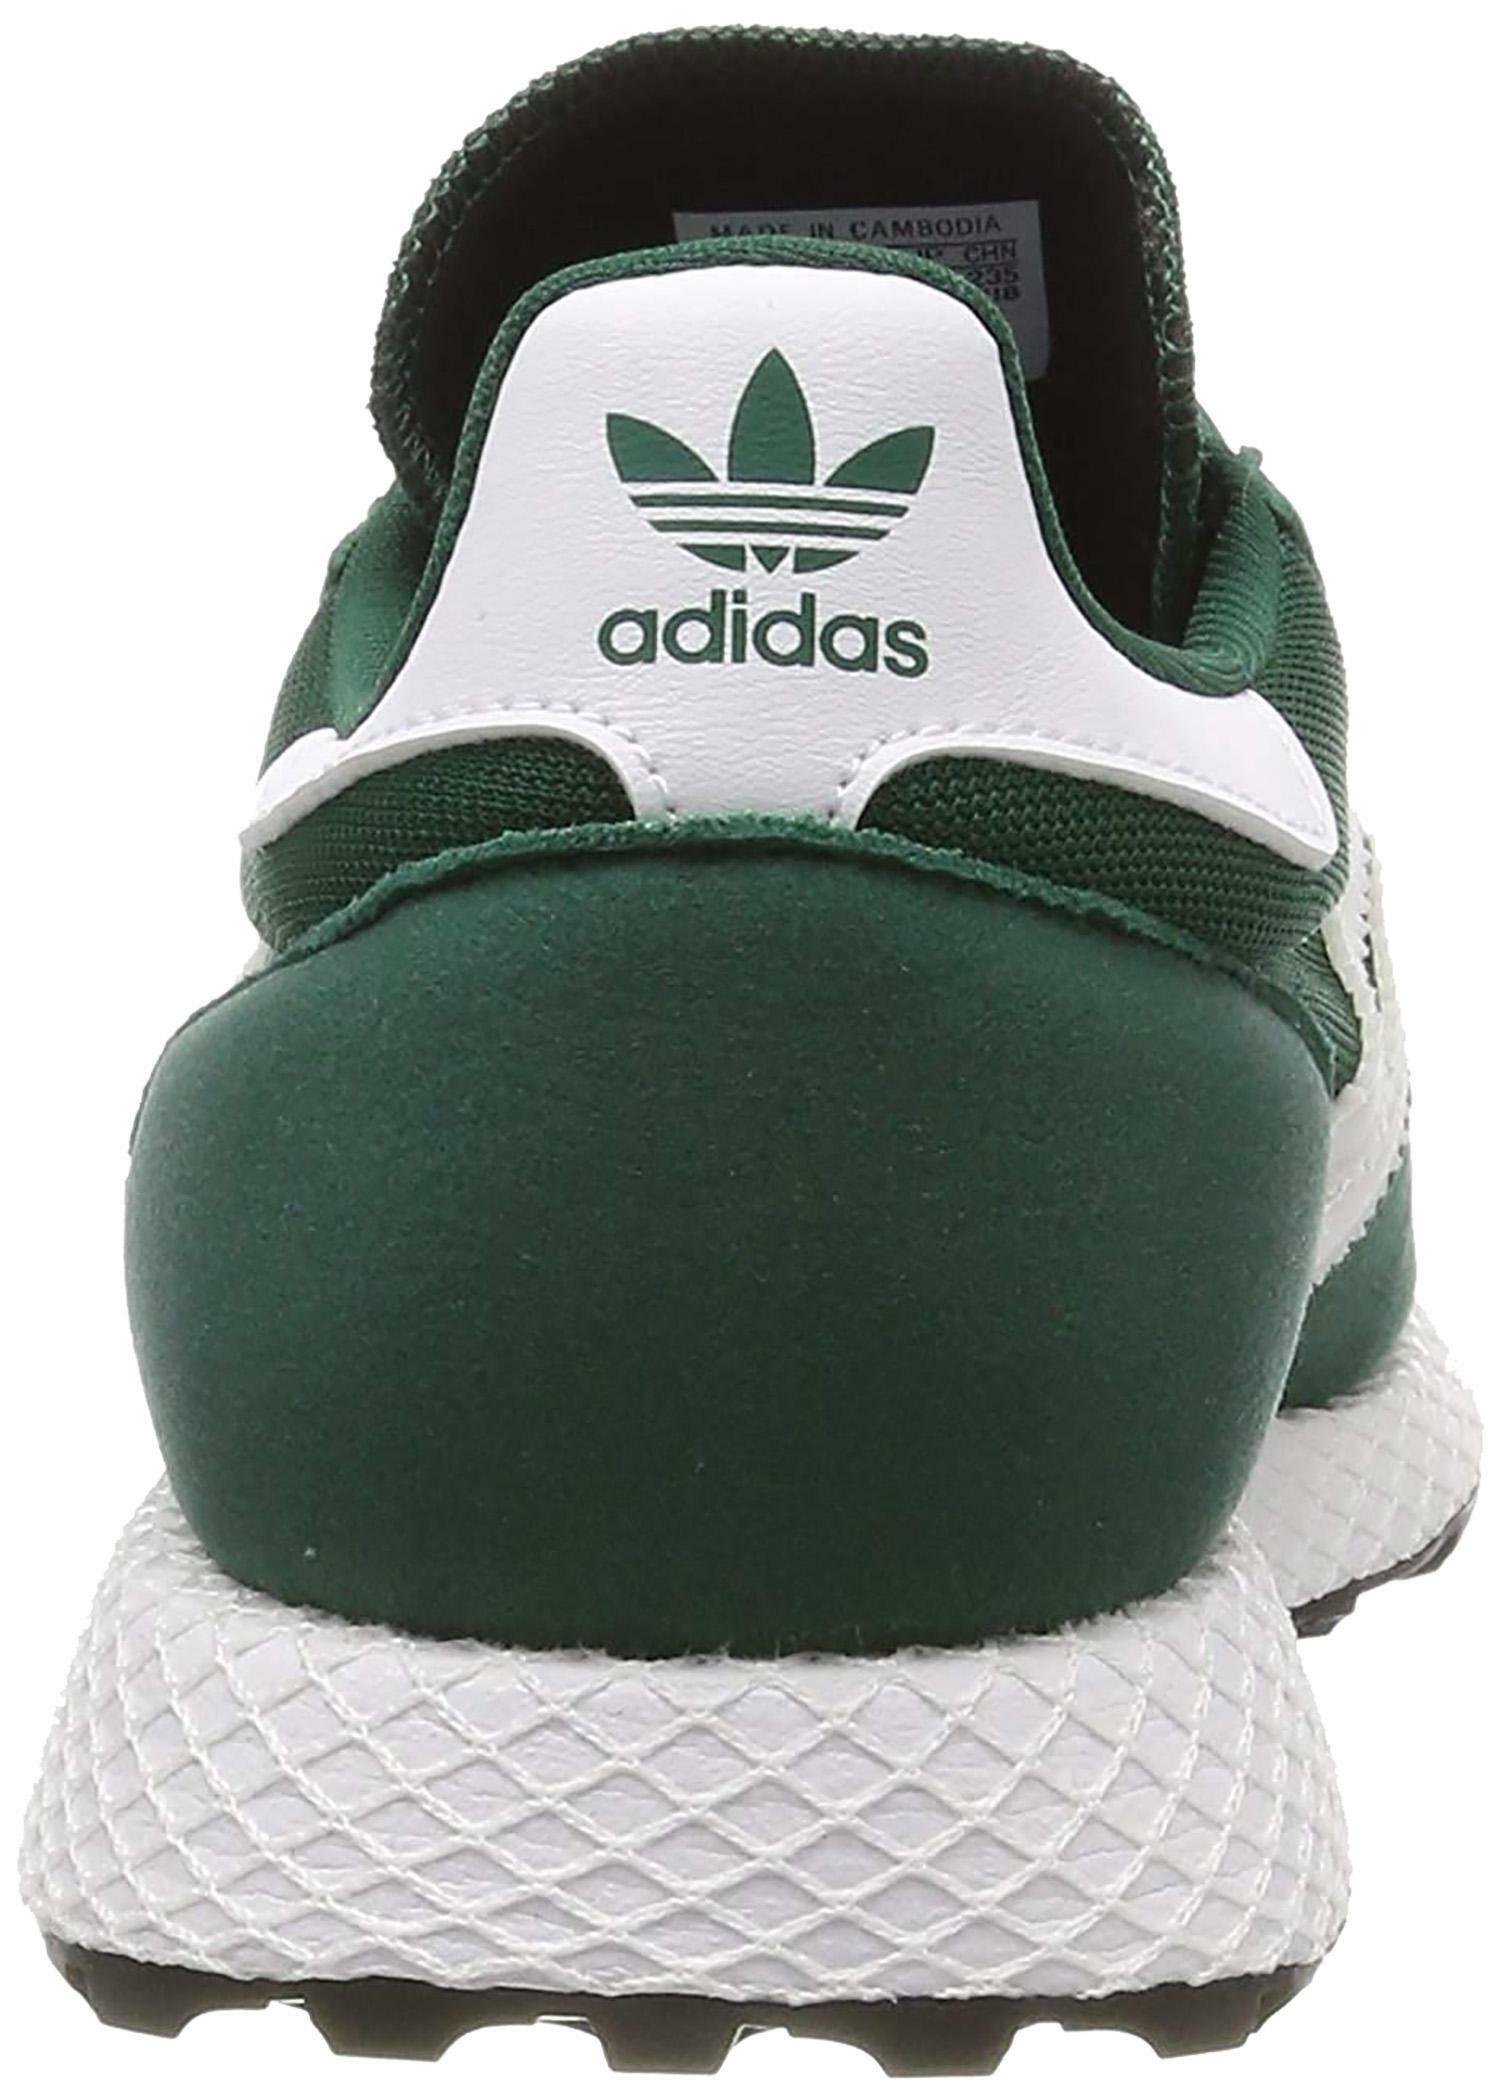 adidas adidas forest grove j scarpe sportive verdi cg6797